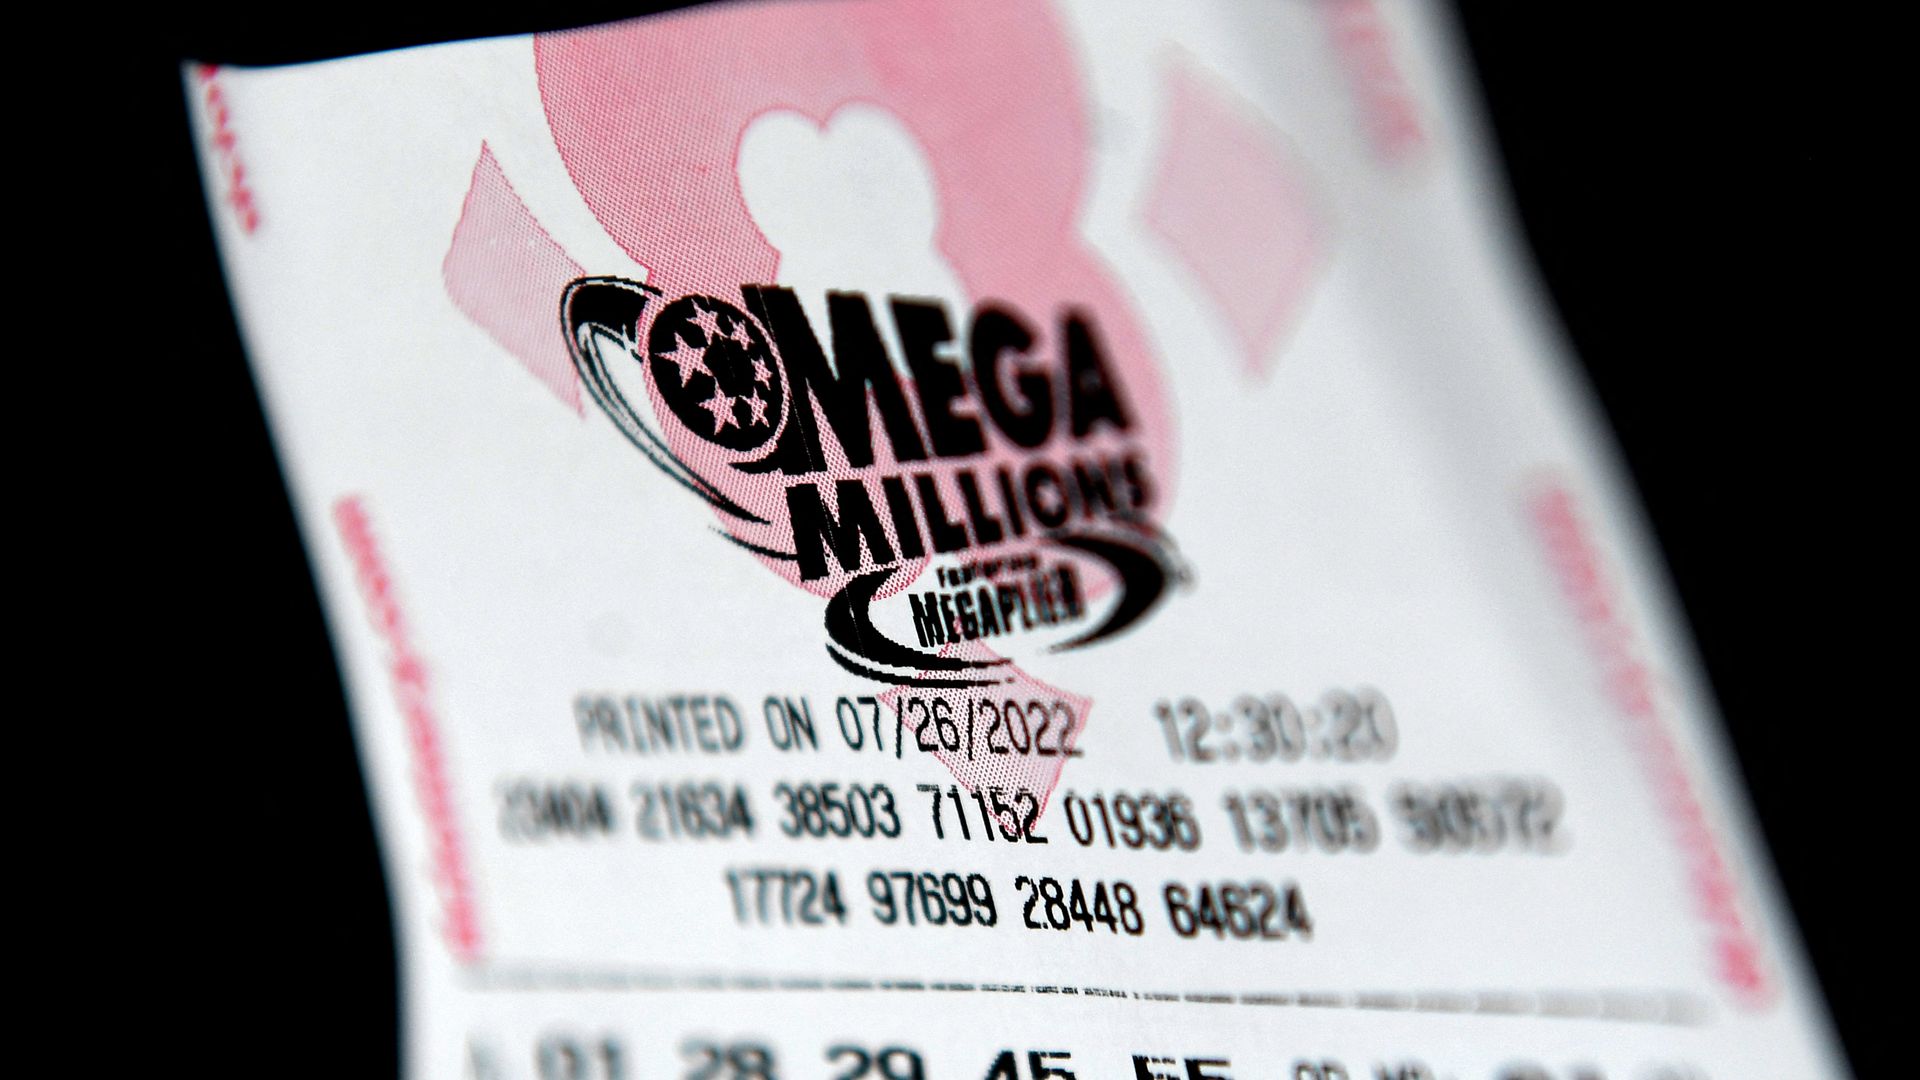 Mega Millions lottery ticket